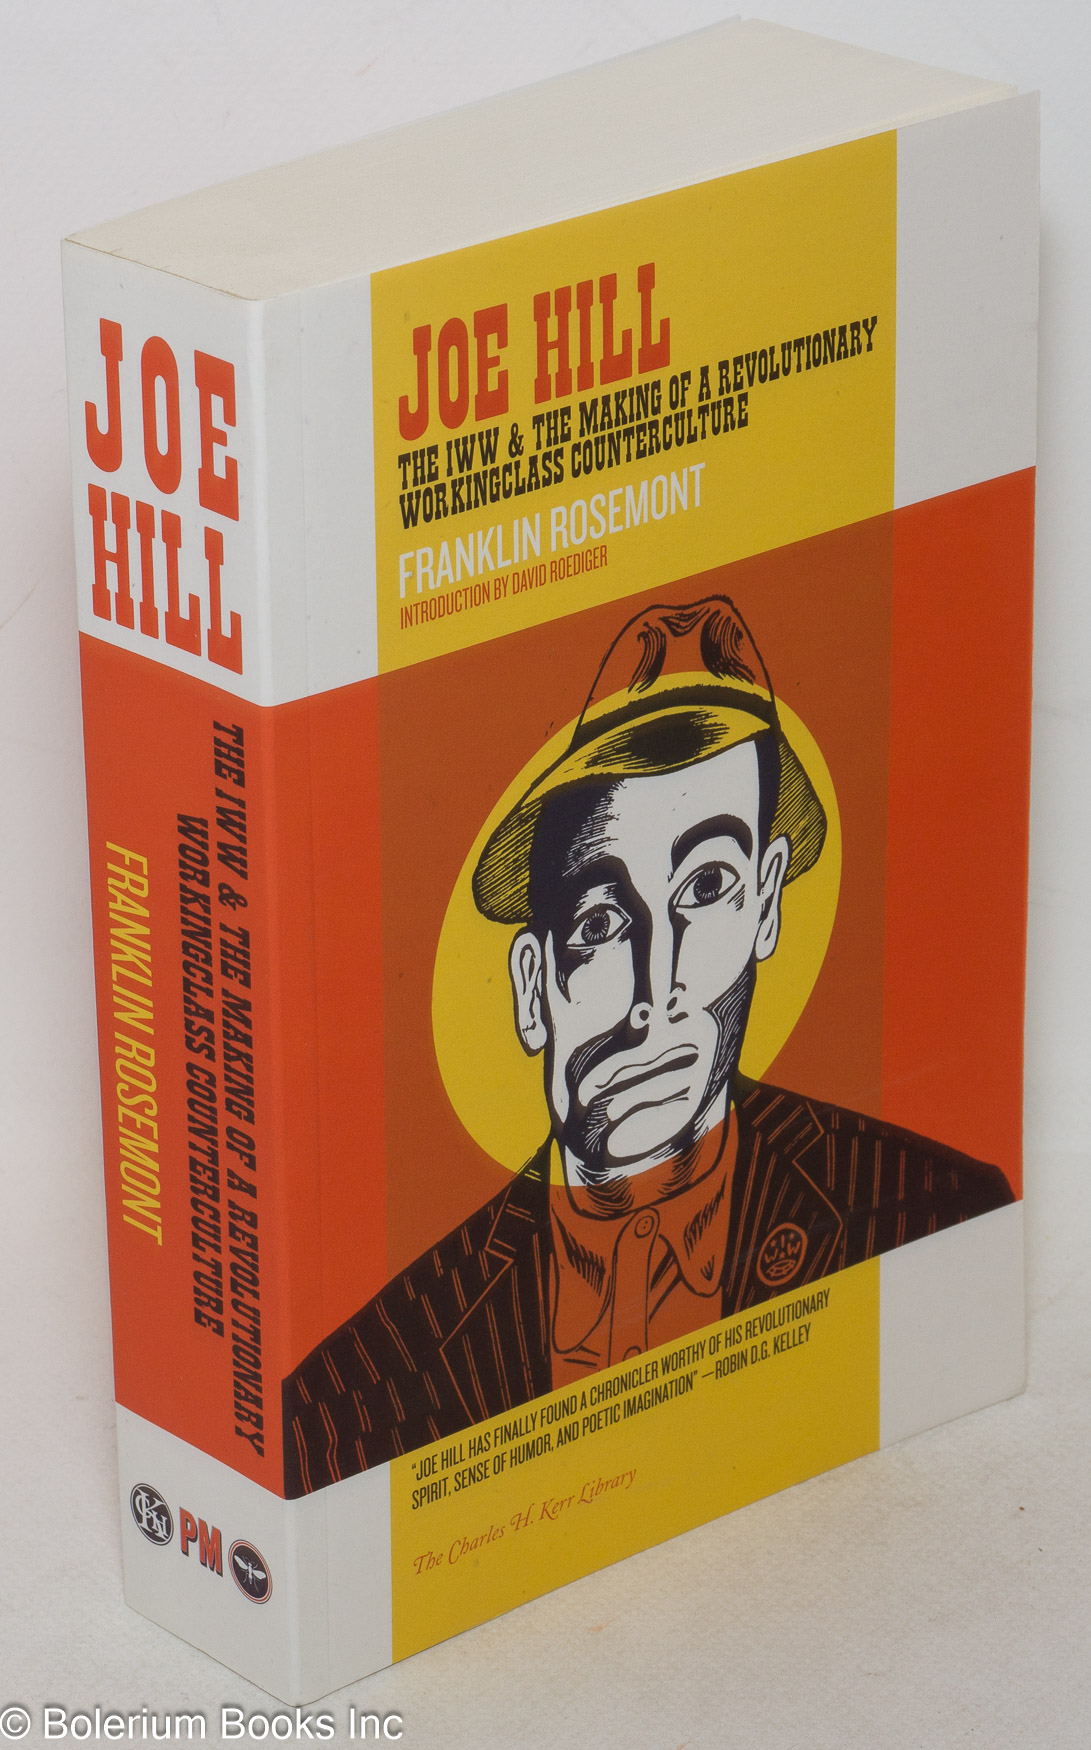 Joe Hill. The IWW & the making of a revolutionary workingclass counterculture - Rosemont, Franklin